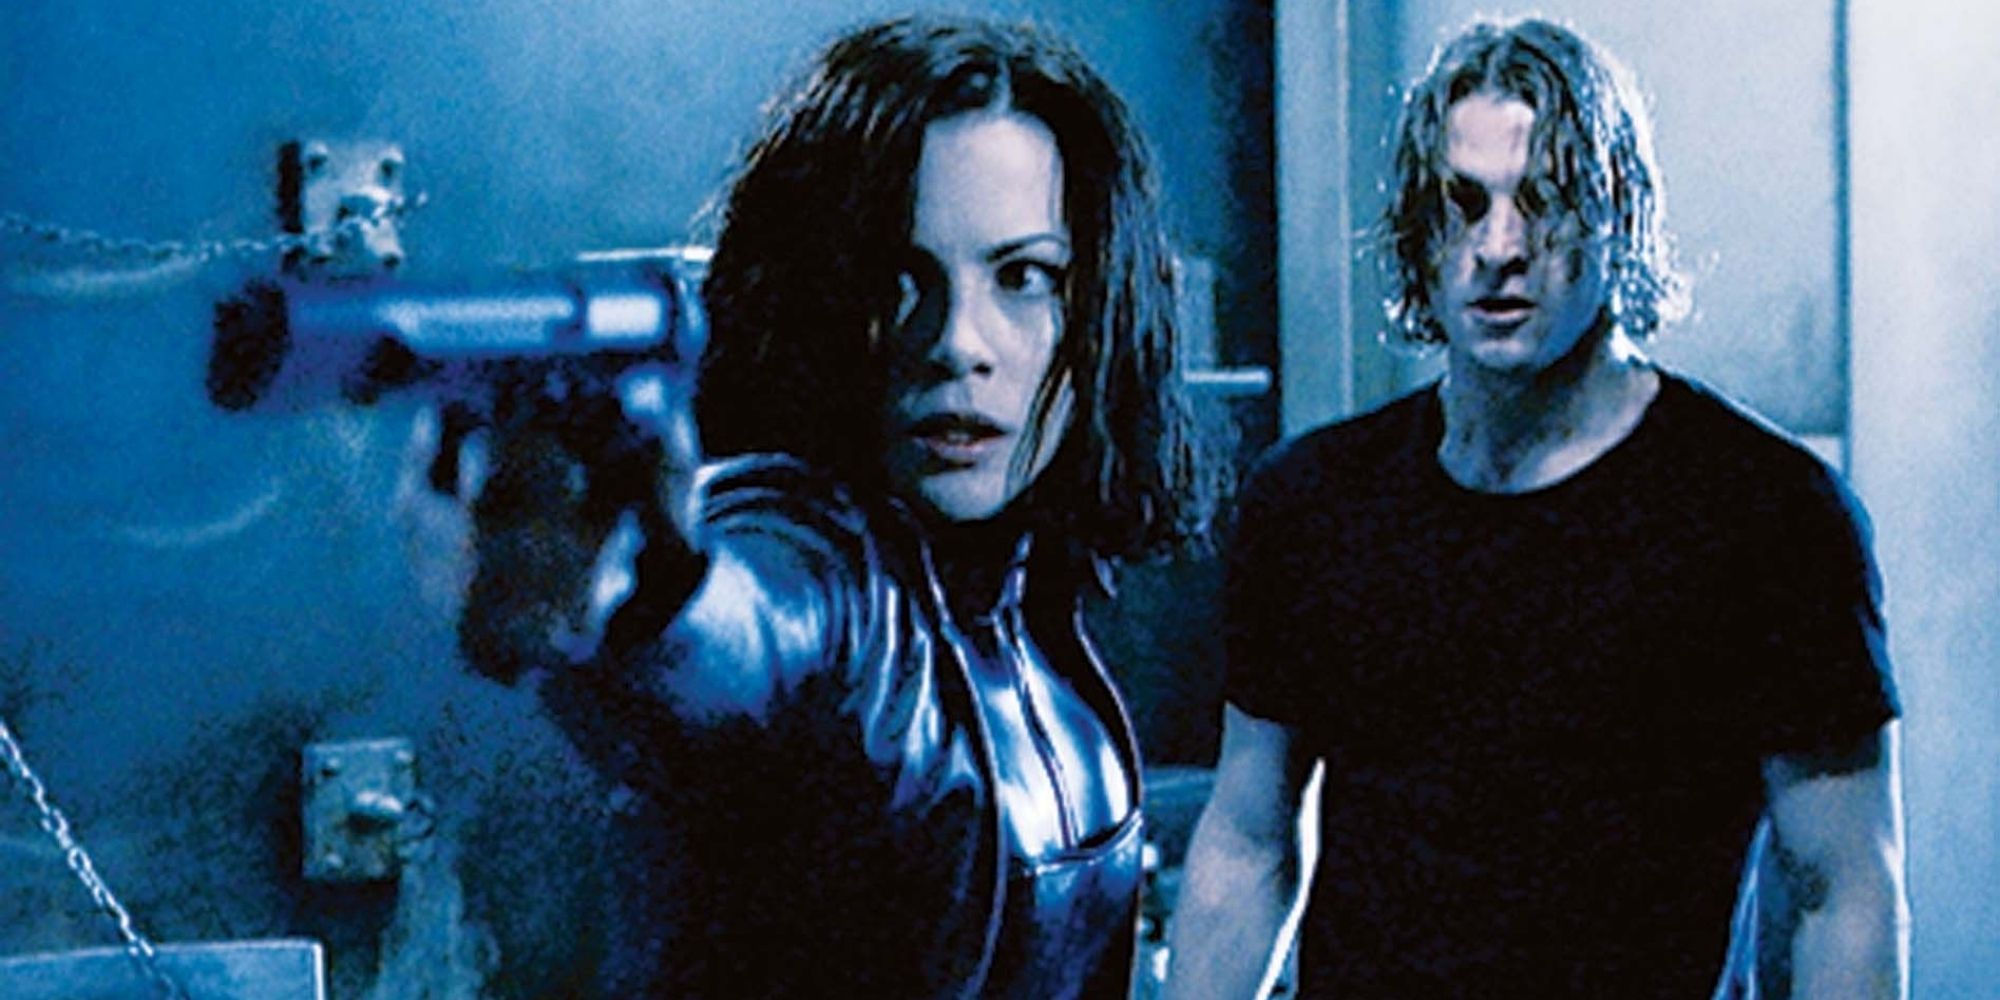 Kate Beckinsale as Selene protecting werewolf Michael played by Scott Speedman in Underworld